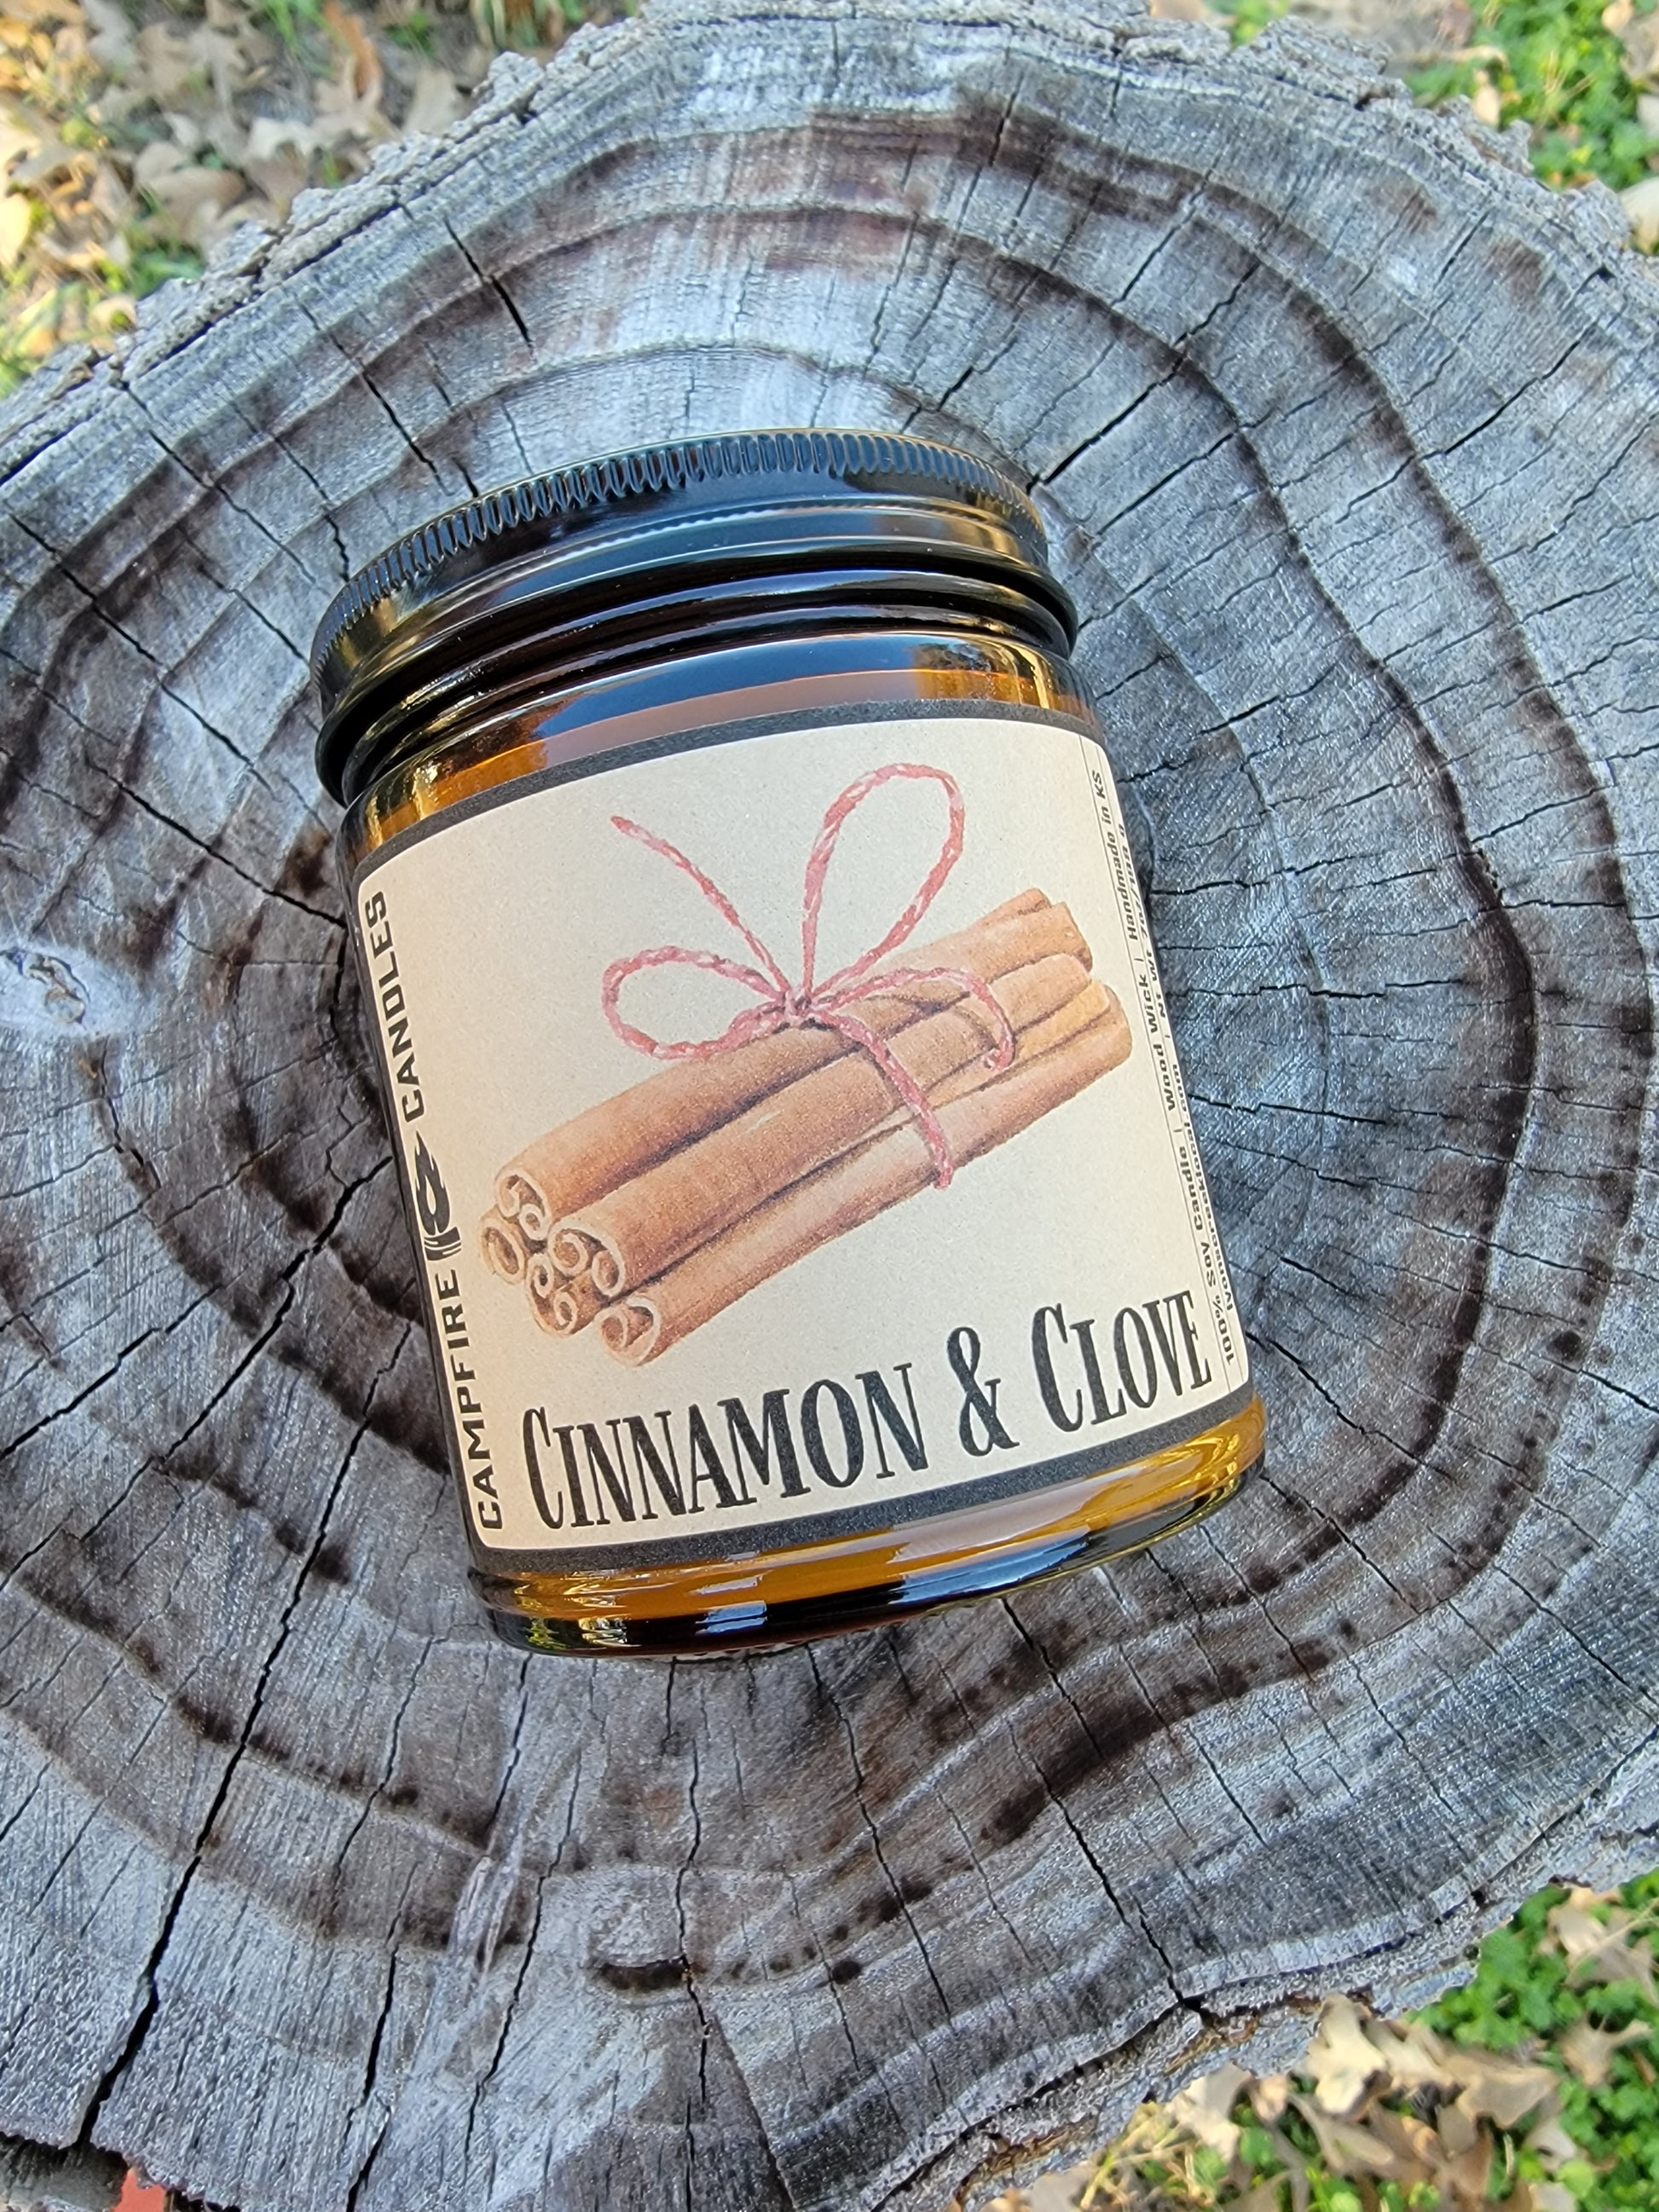 Cinnamon Pine Clove Candle 16oz- 100% Beeswax, Cedar Wood Wicks